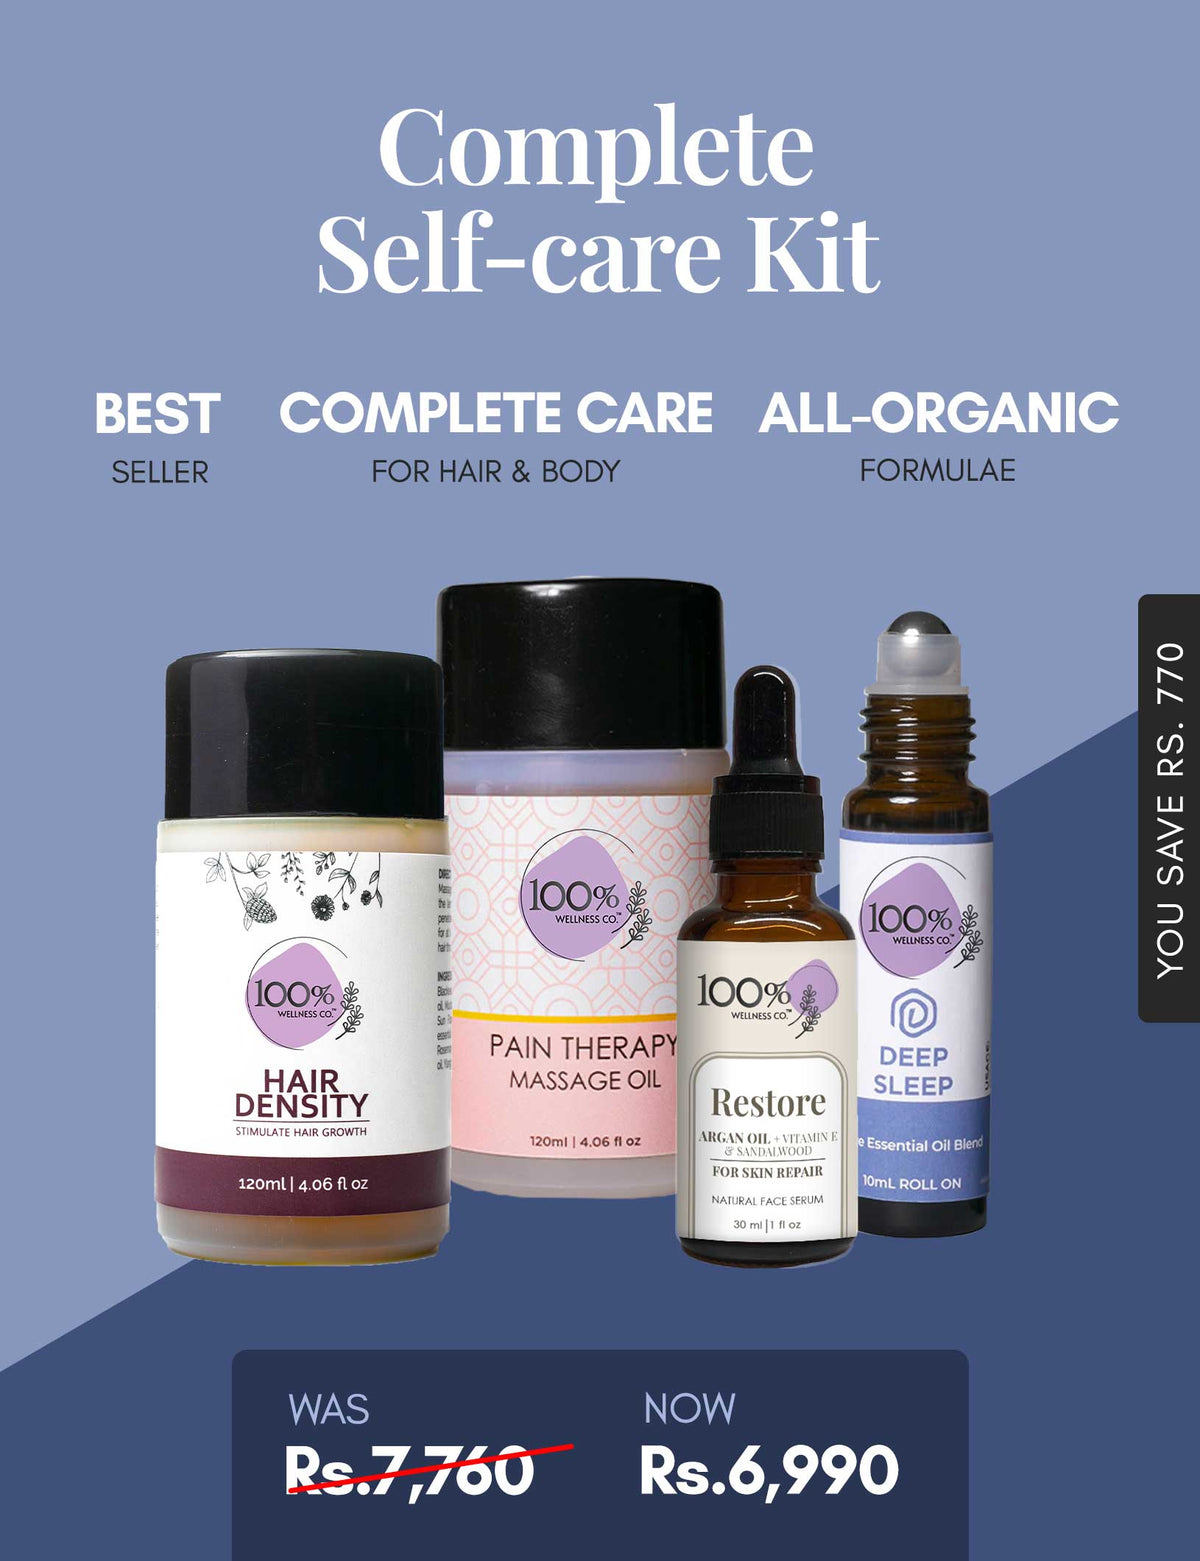 Complete Self-care Kit